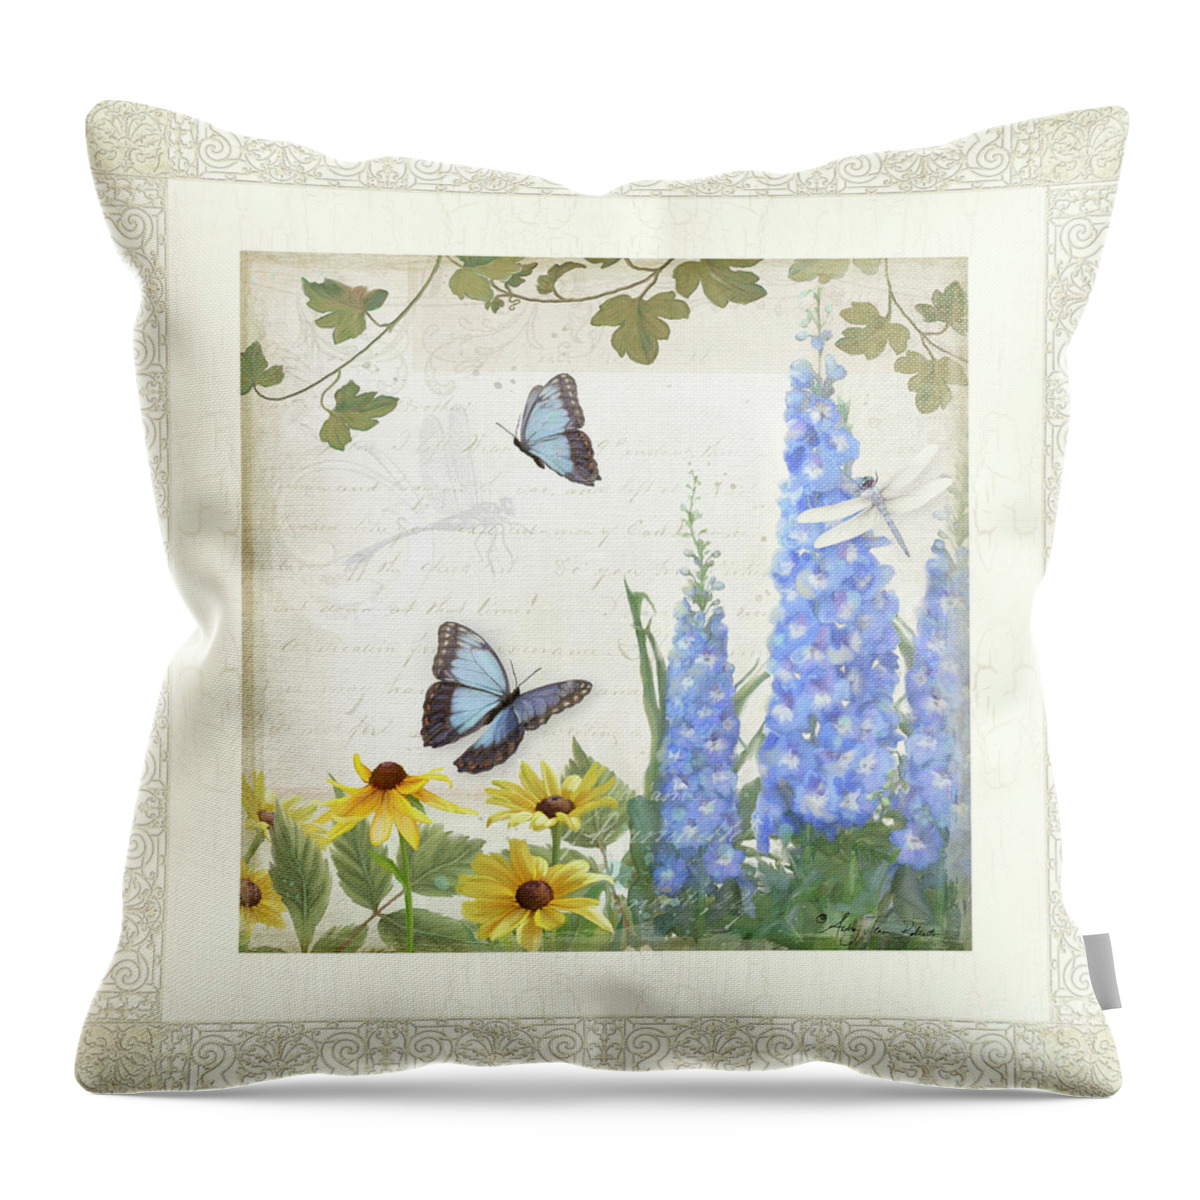 E Petit Jardin Throw Pillow featuring the painting Le Petit Jardin 1 - Garden Floral w Butterflies, Dragonflies, Daisies and Delphinium by Audrey Jeanne Roberts